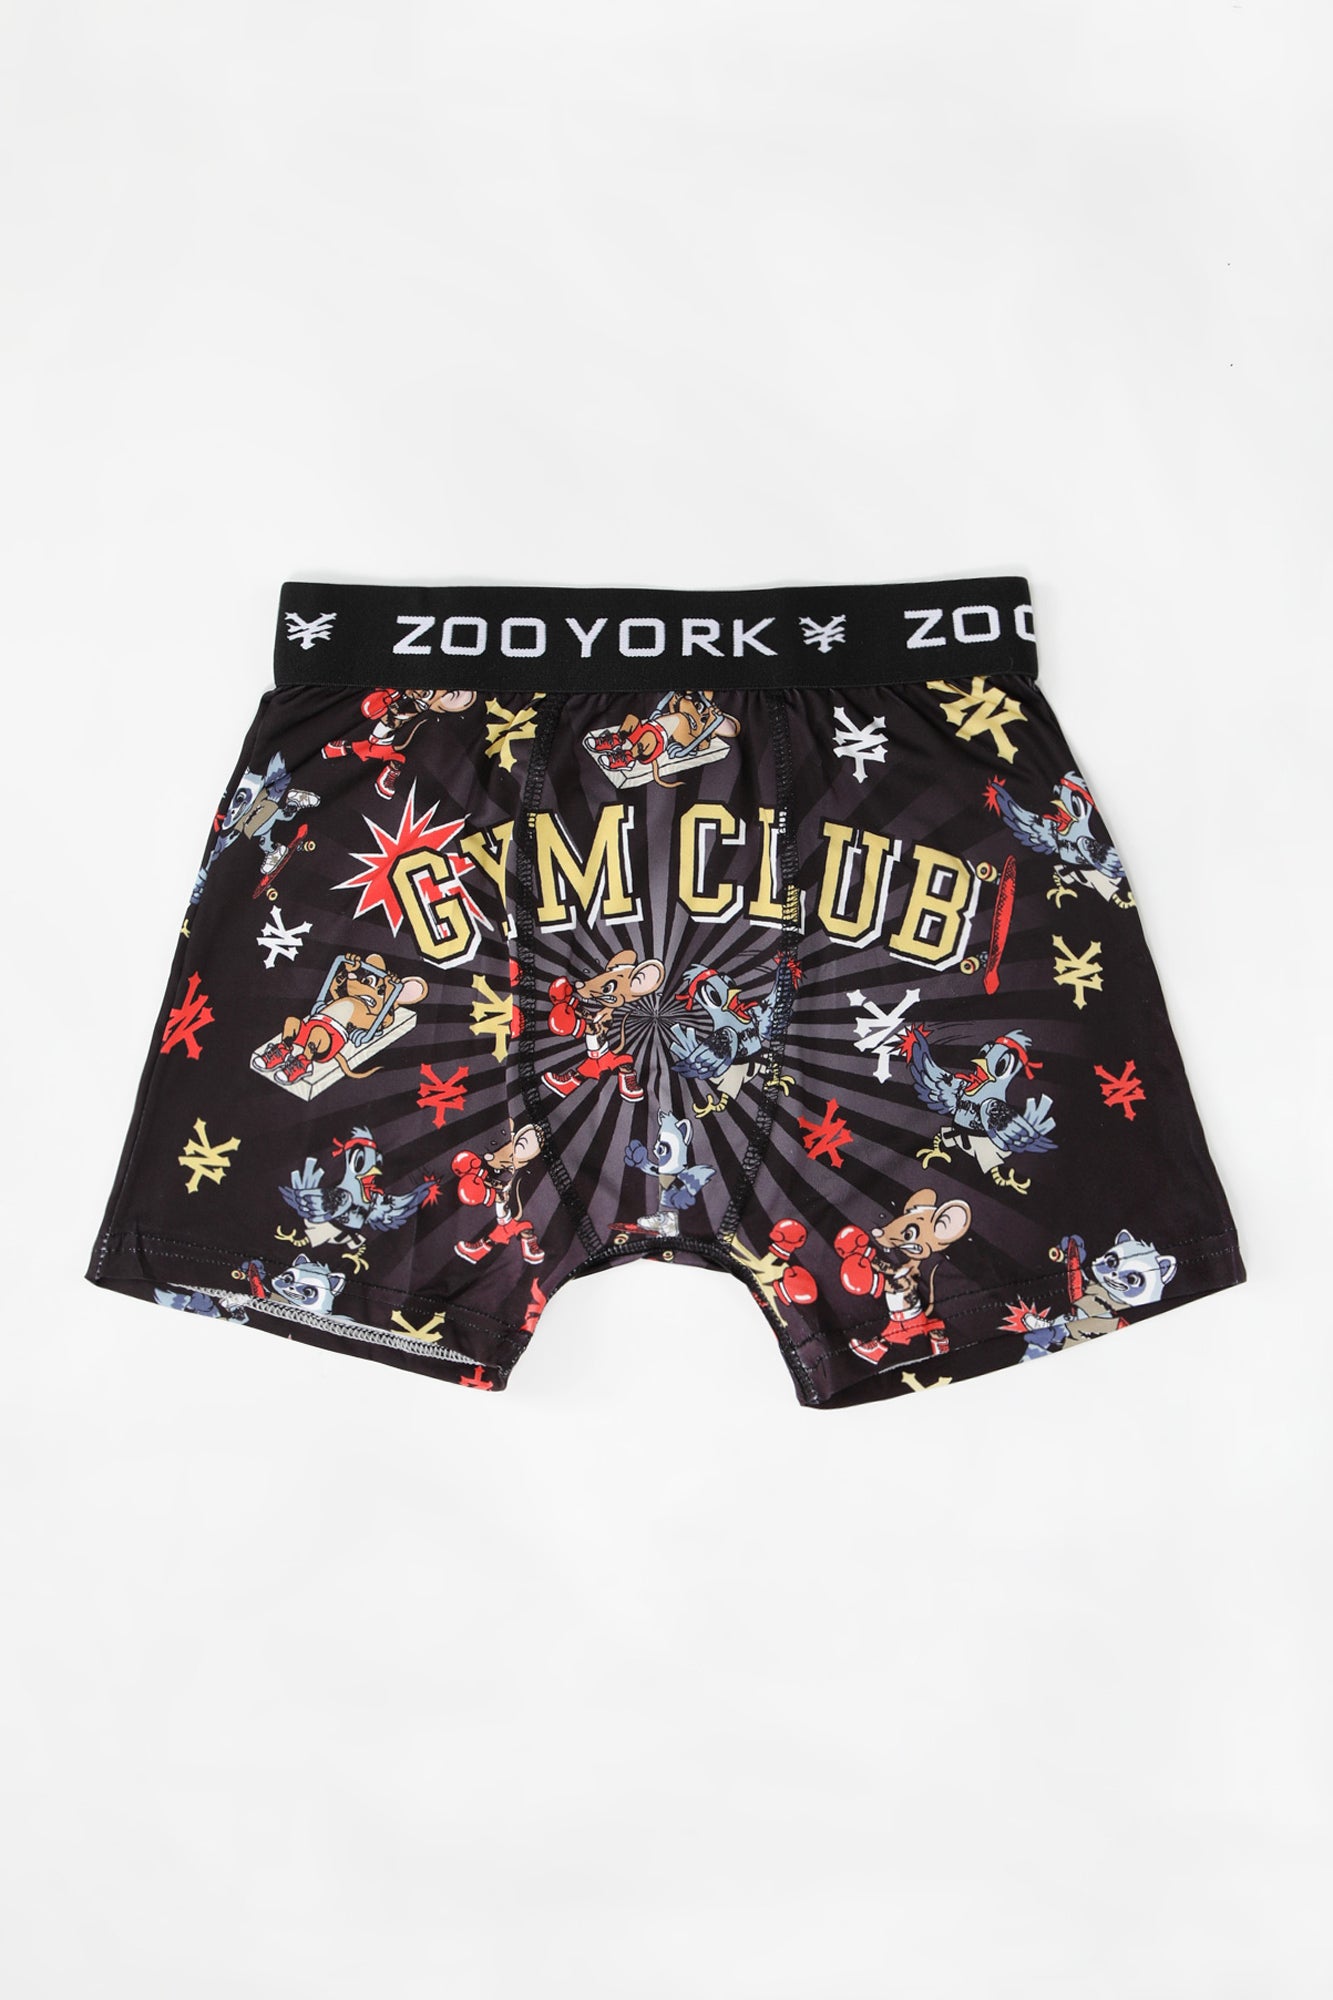 Zoo York Mens Gym Club Boxer Brief - Charcoal /